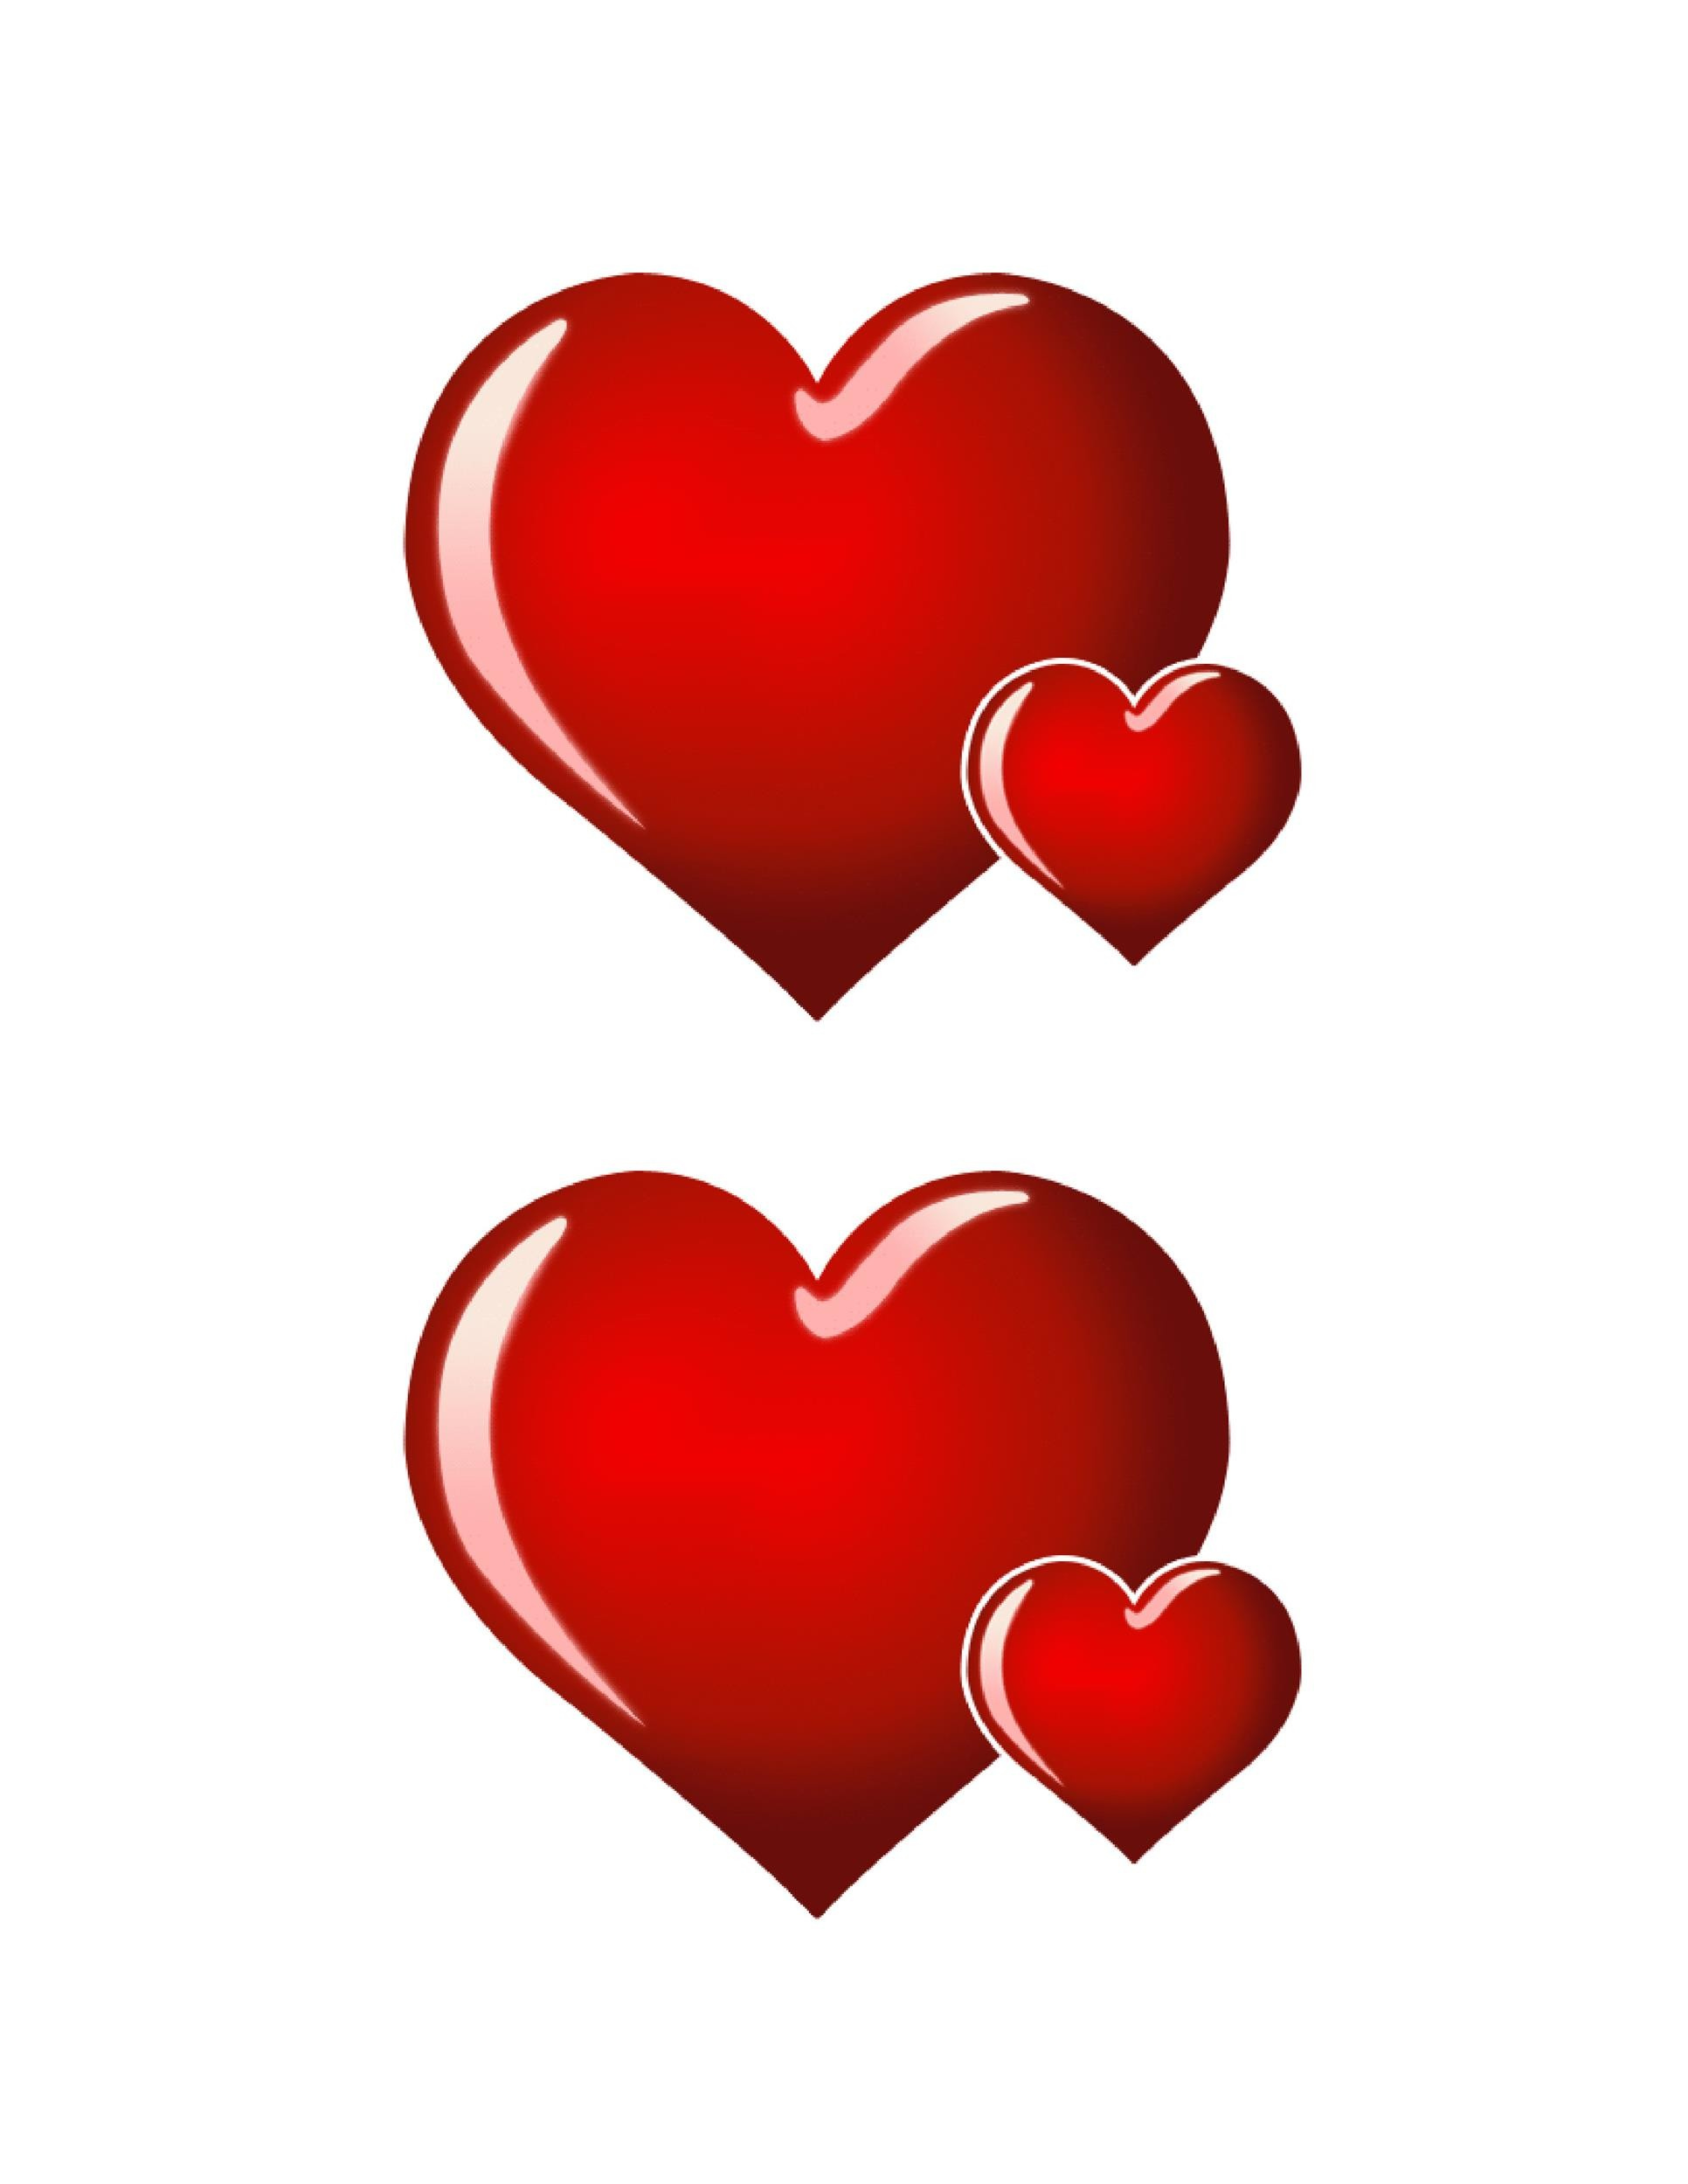 Heart Shape | Heart | Red Heart